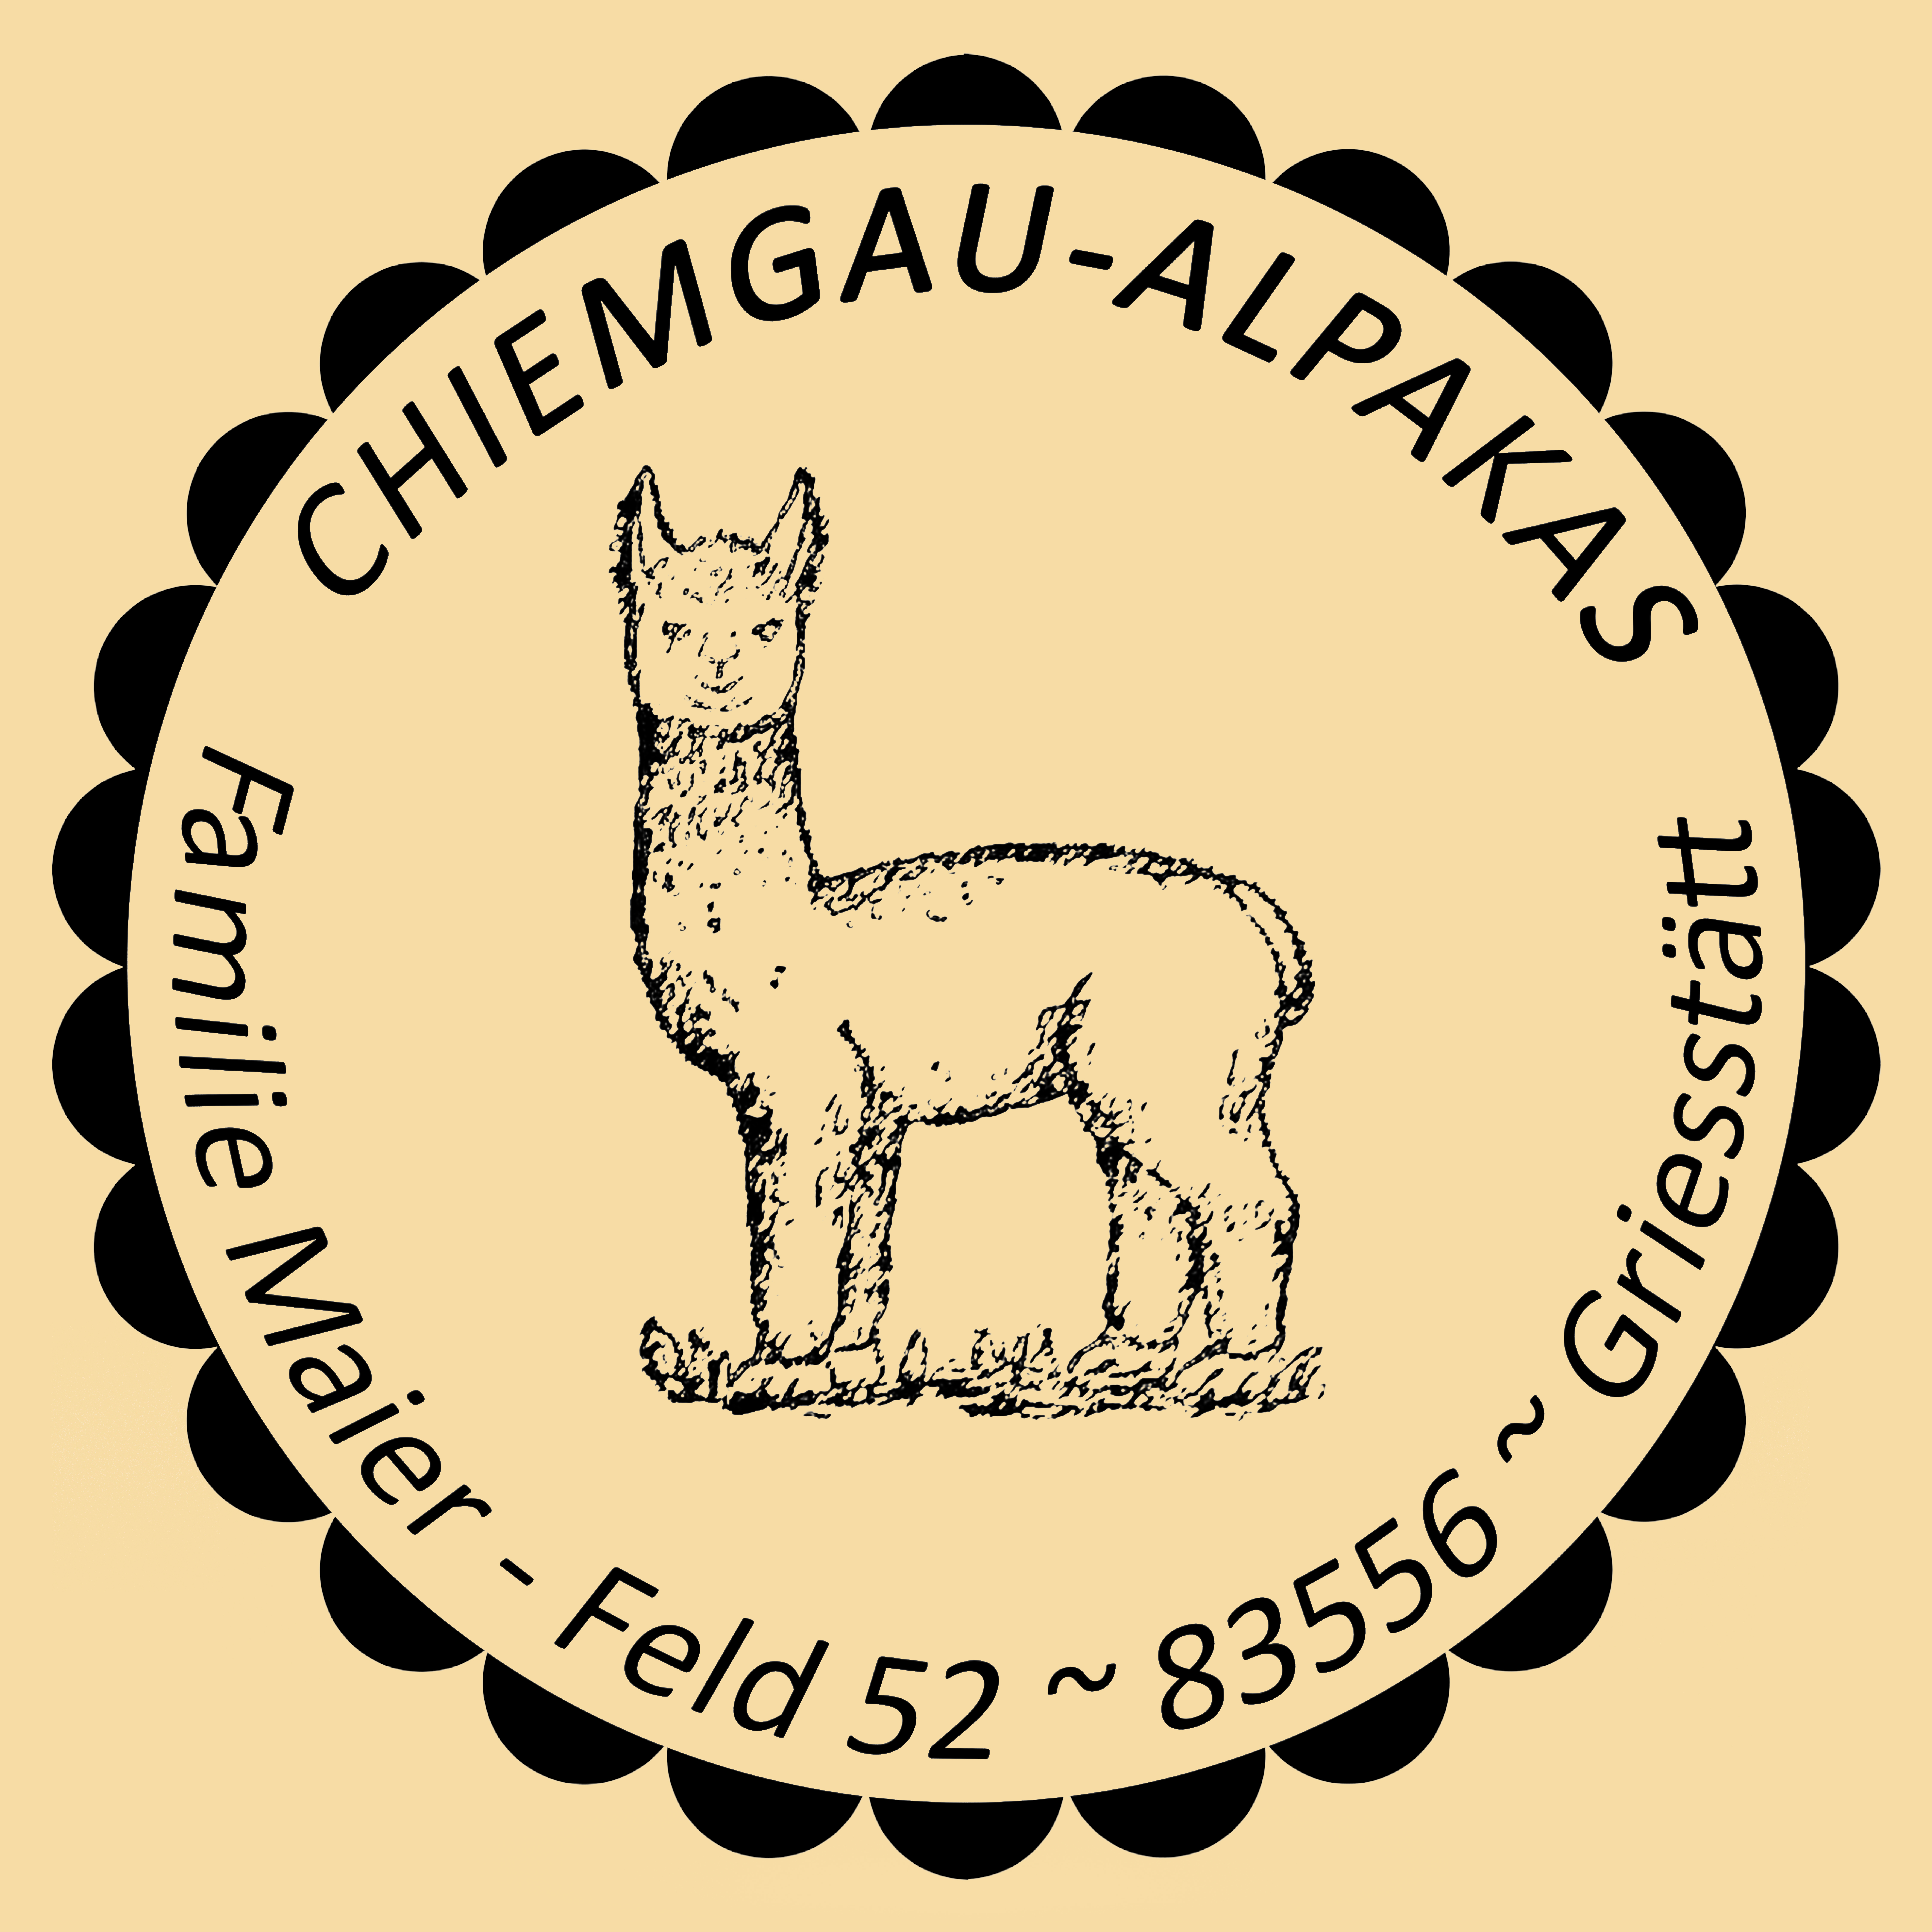 Chiemgau-Alpakas